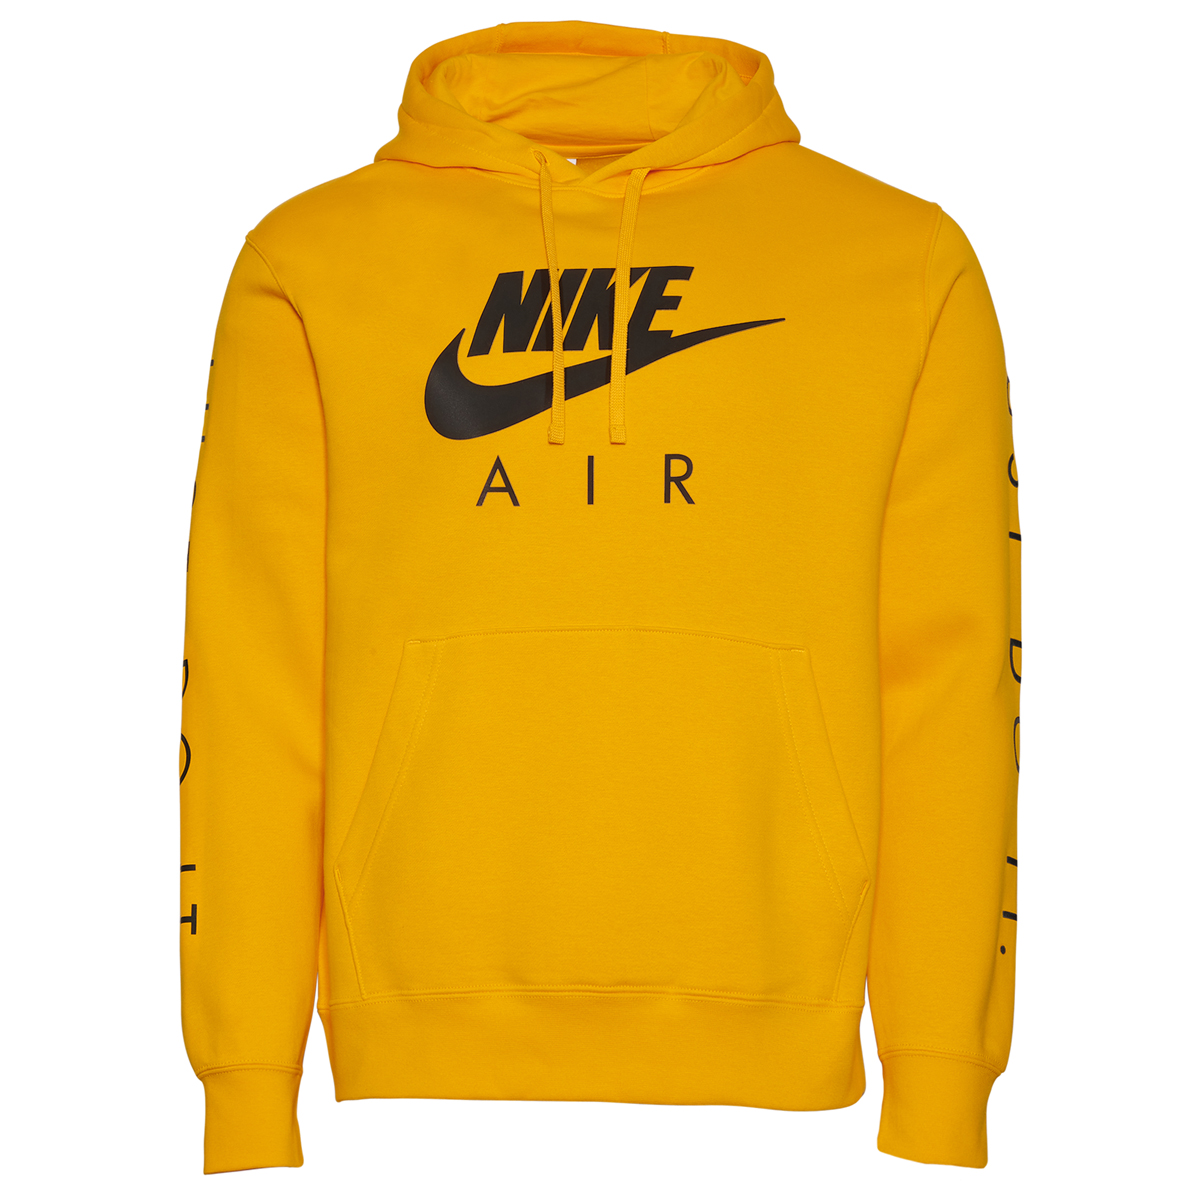 Nike-Air-JDI-Just-Do-It-Hoodie-Yellow-Gold-Black-1